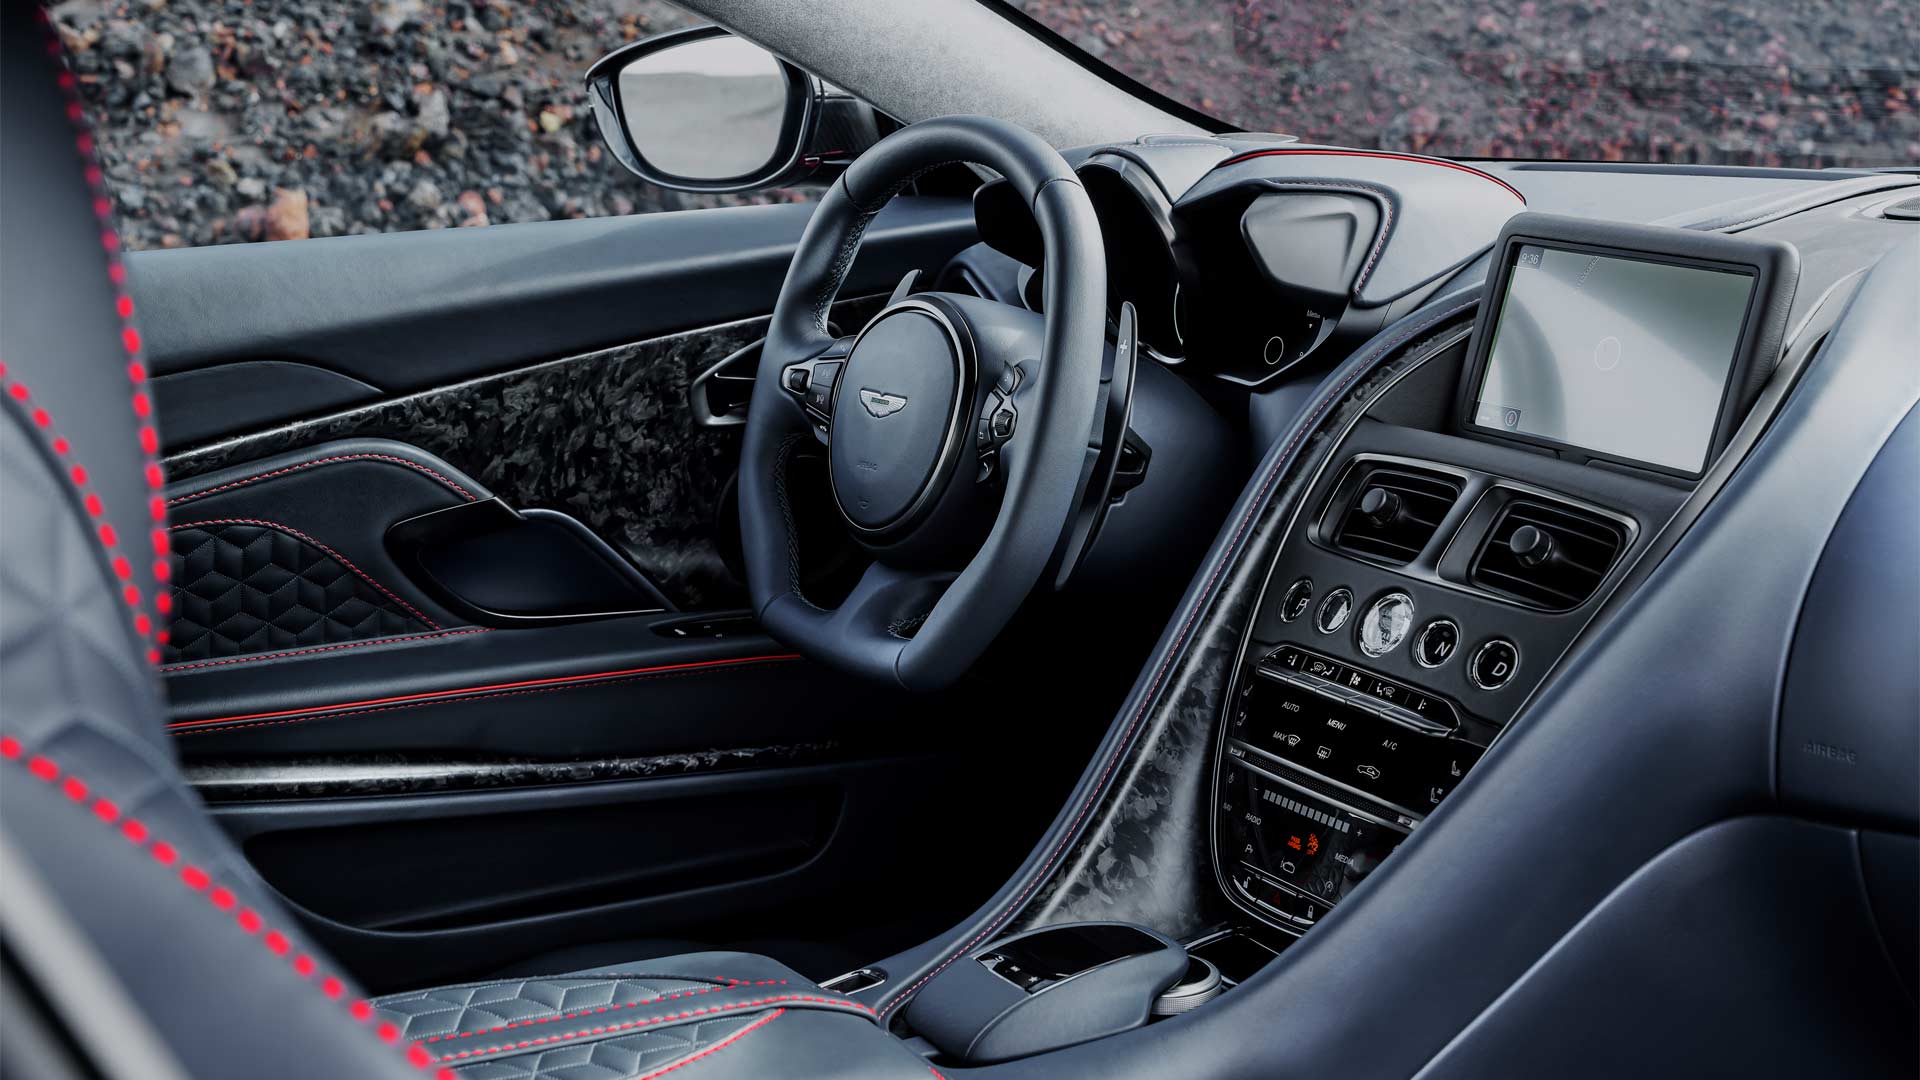 2018-Aston-Martin-DBS-Superleggera-interior